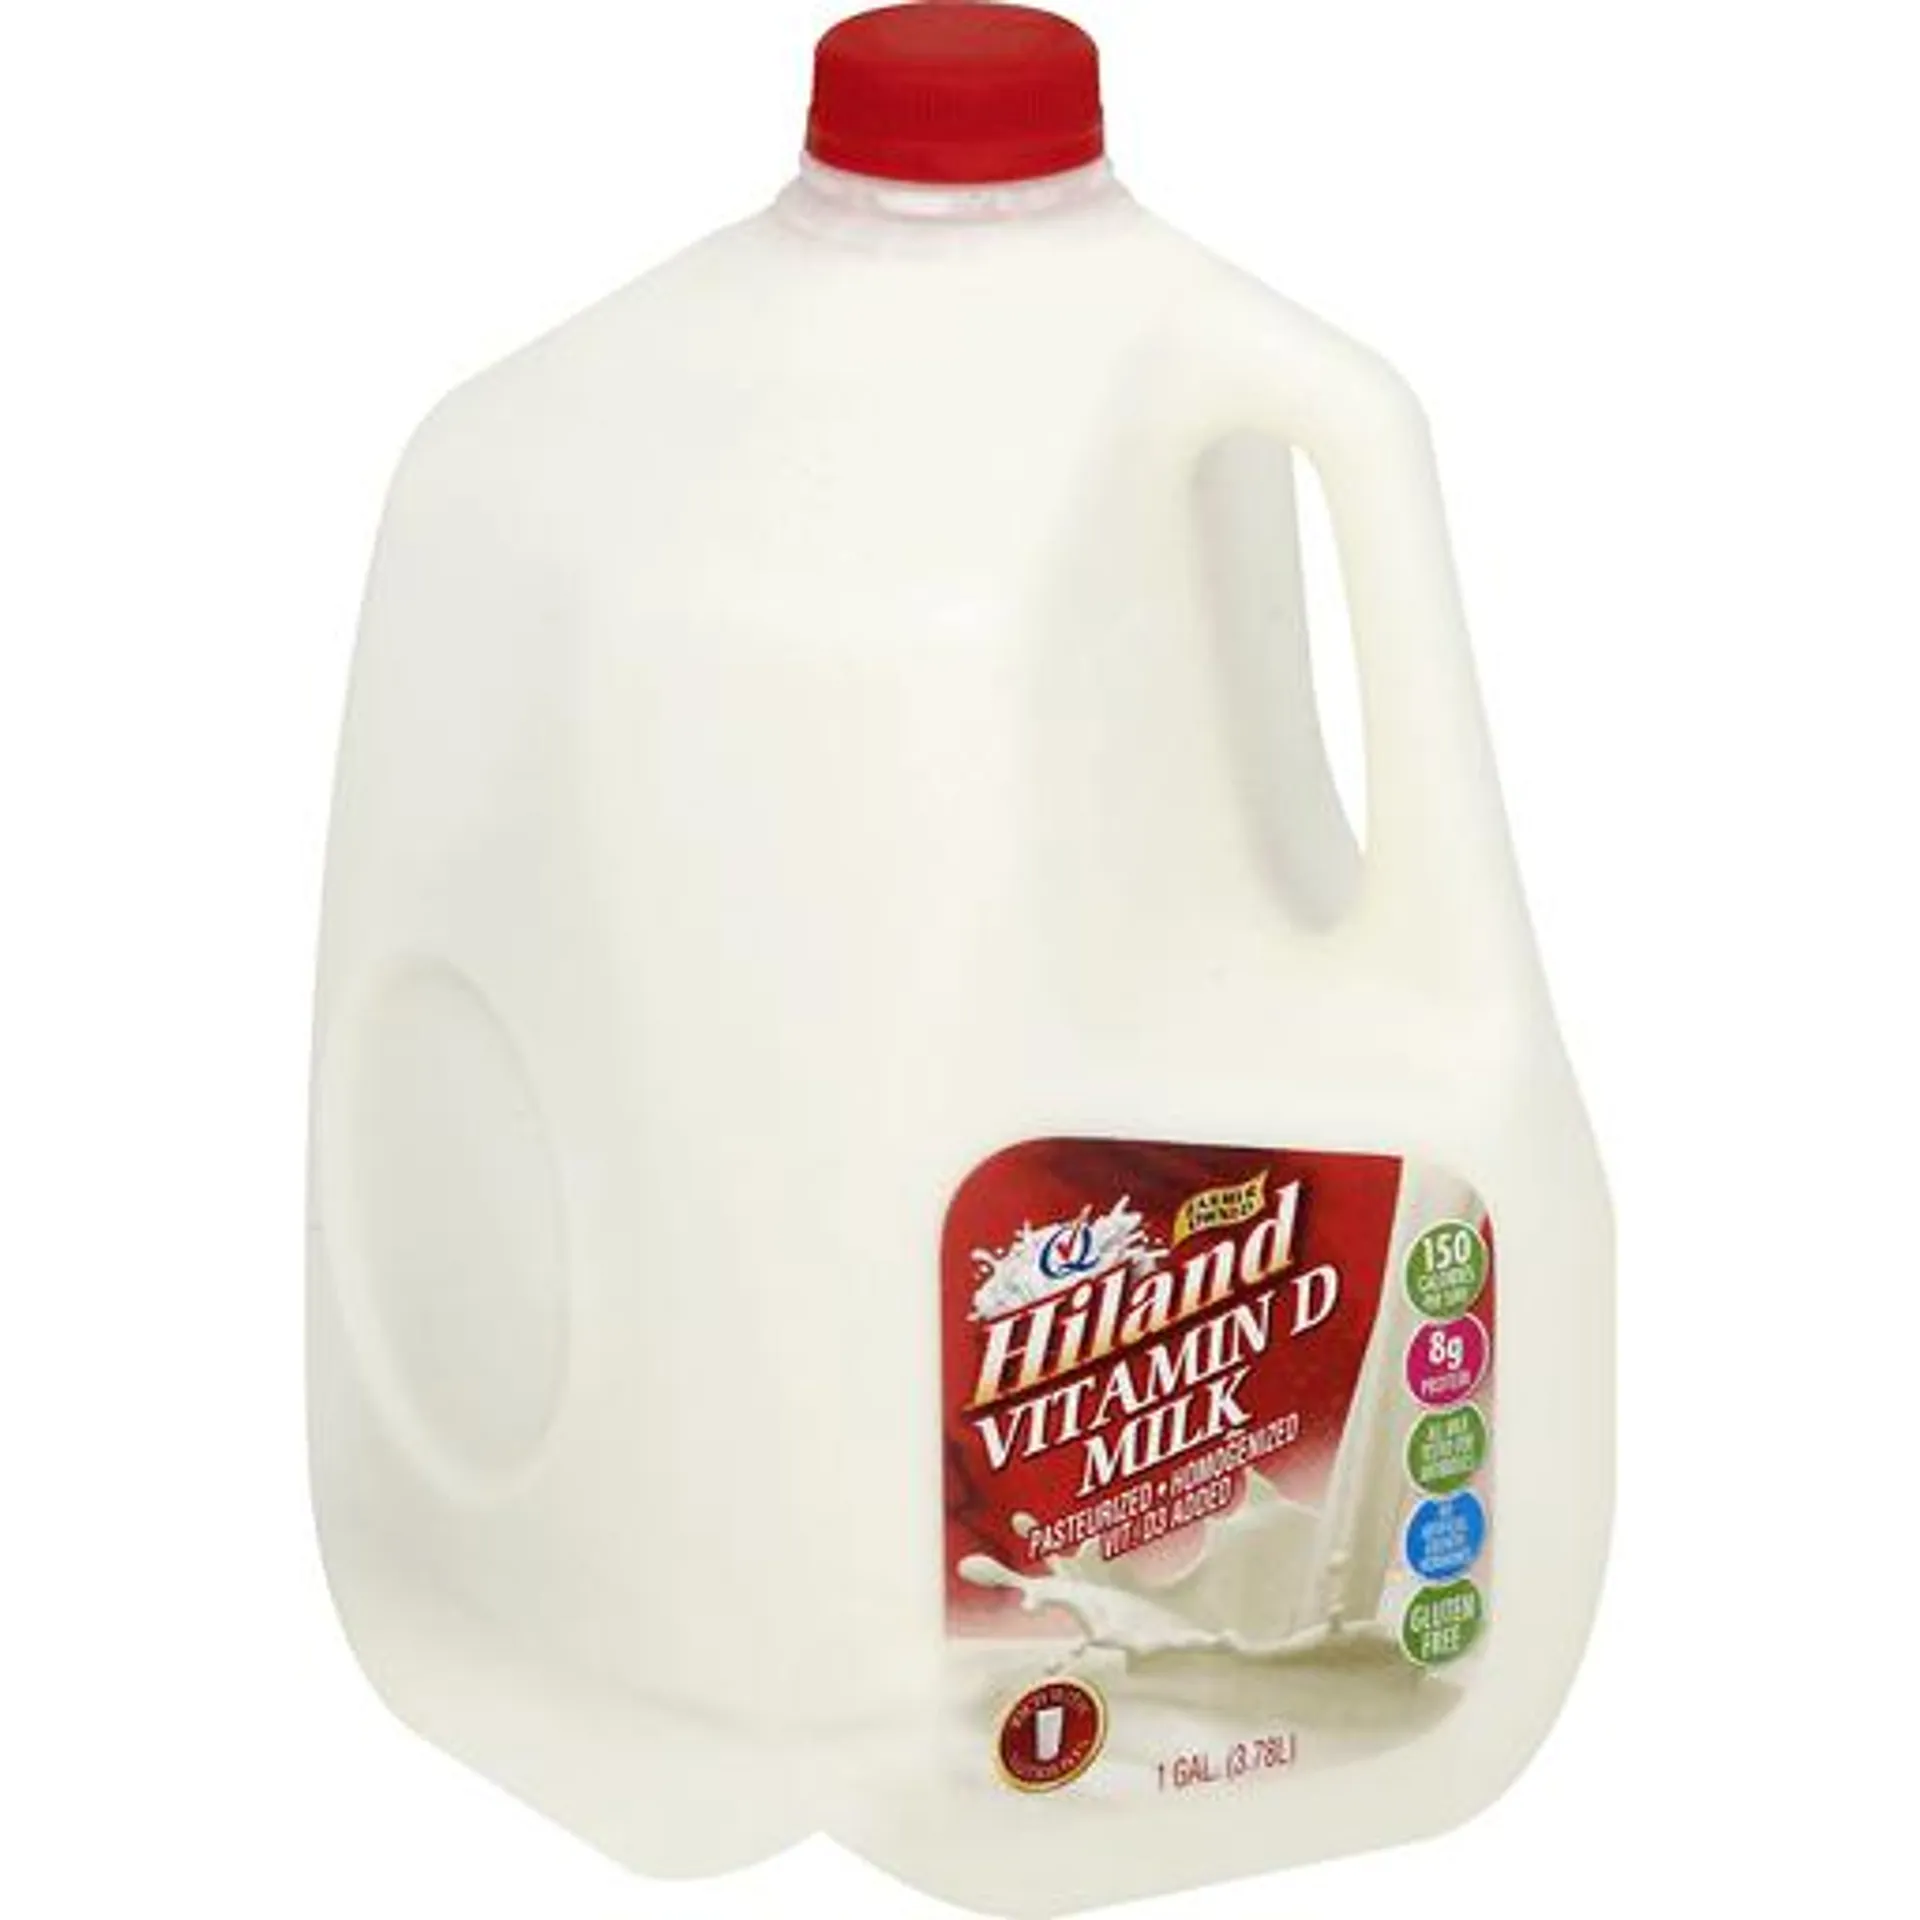 Hiland Vitamin D Milk, 1 gallon